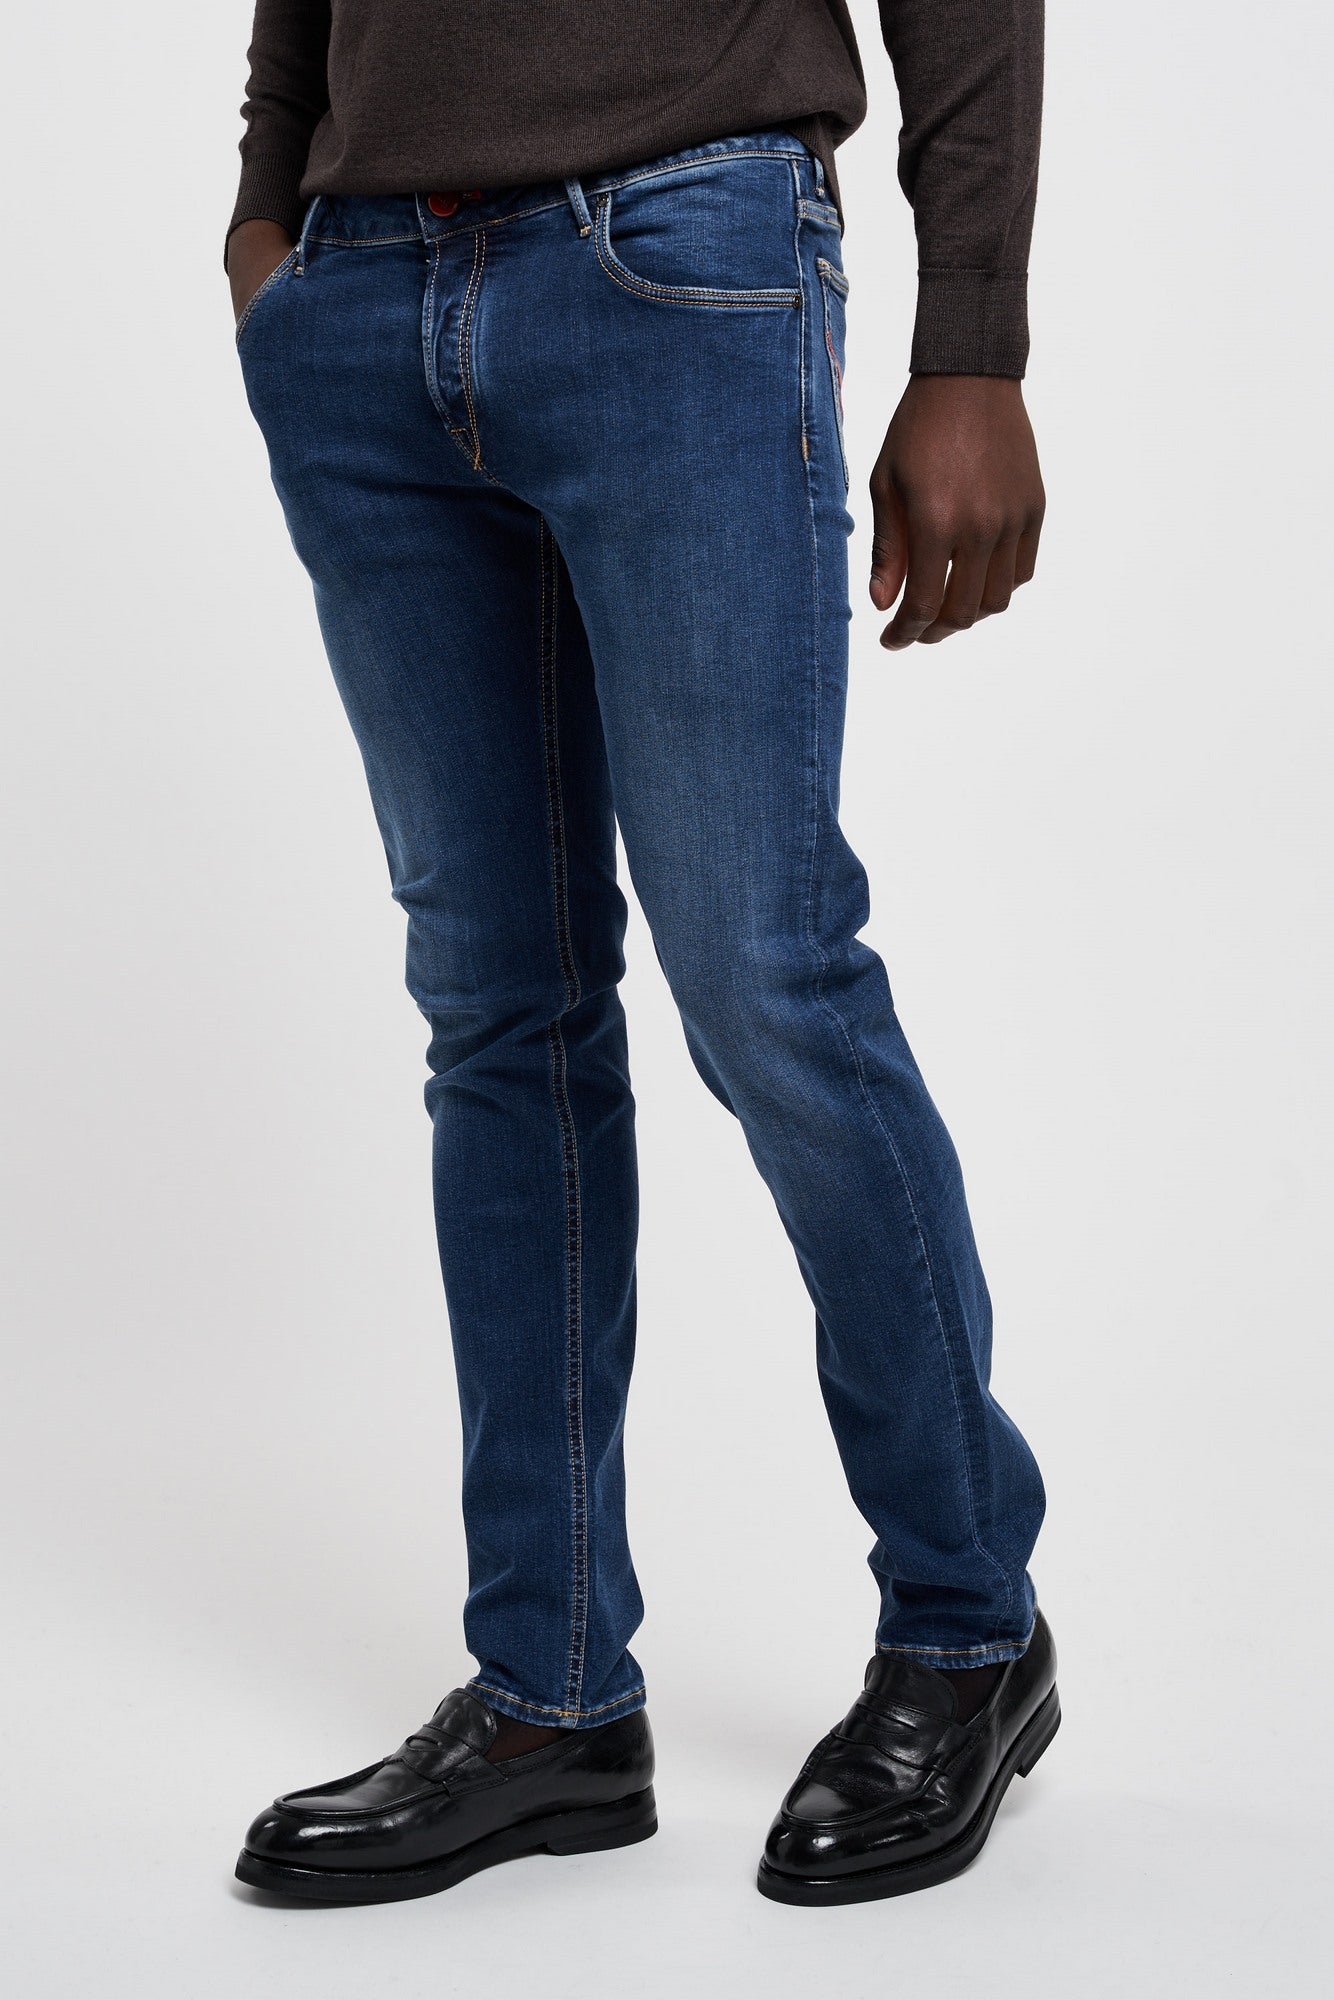 Handpicked Jeans Orvieto in Blue Cotton - 5